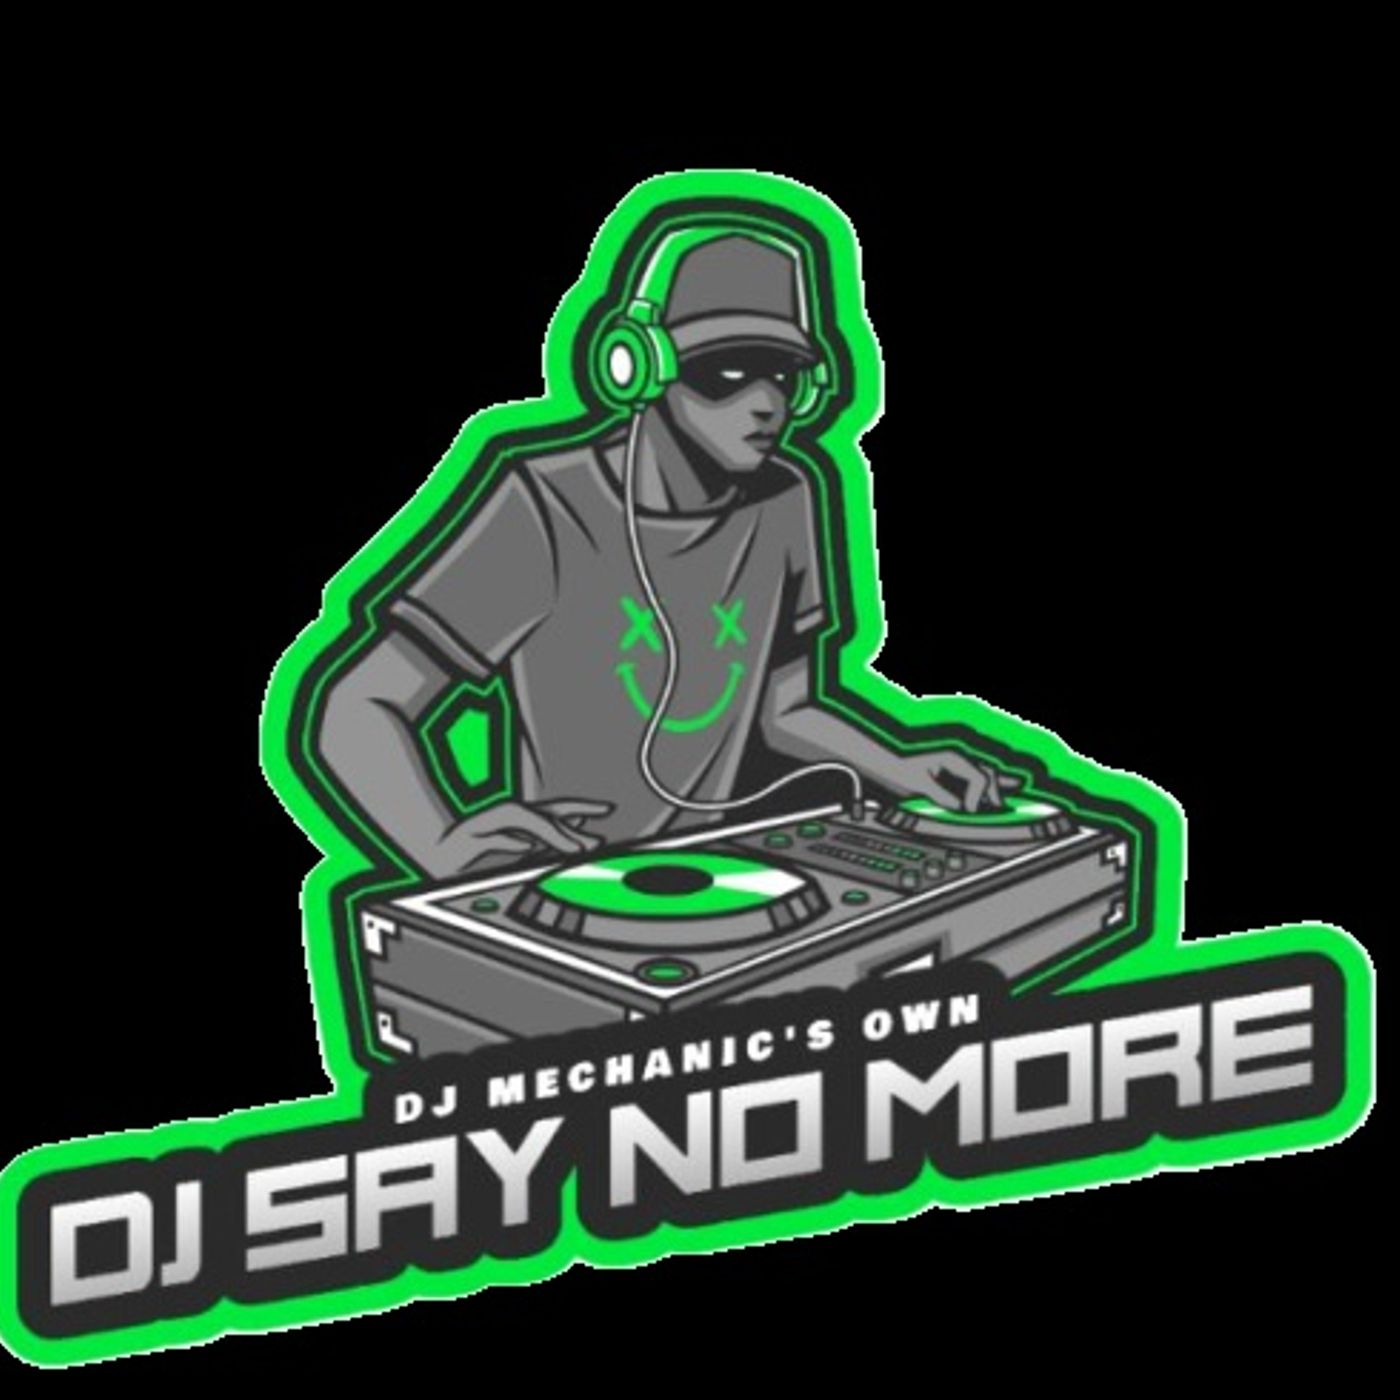 DJ Say No More of the "DJ Mechanics" Live Old School Mix